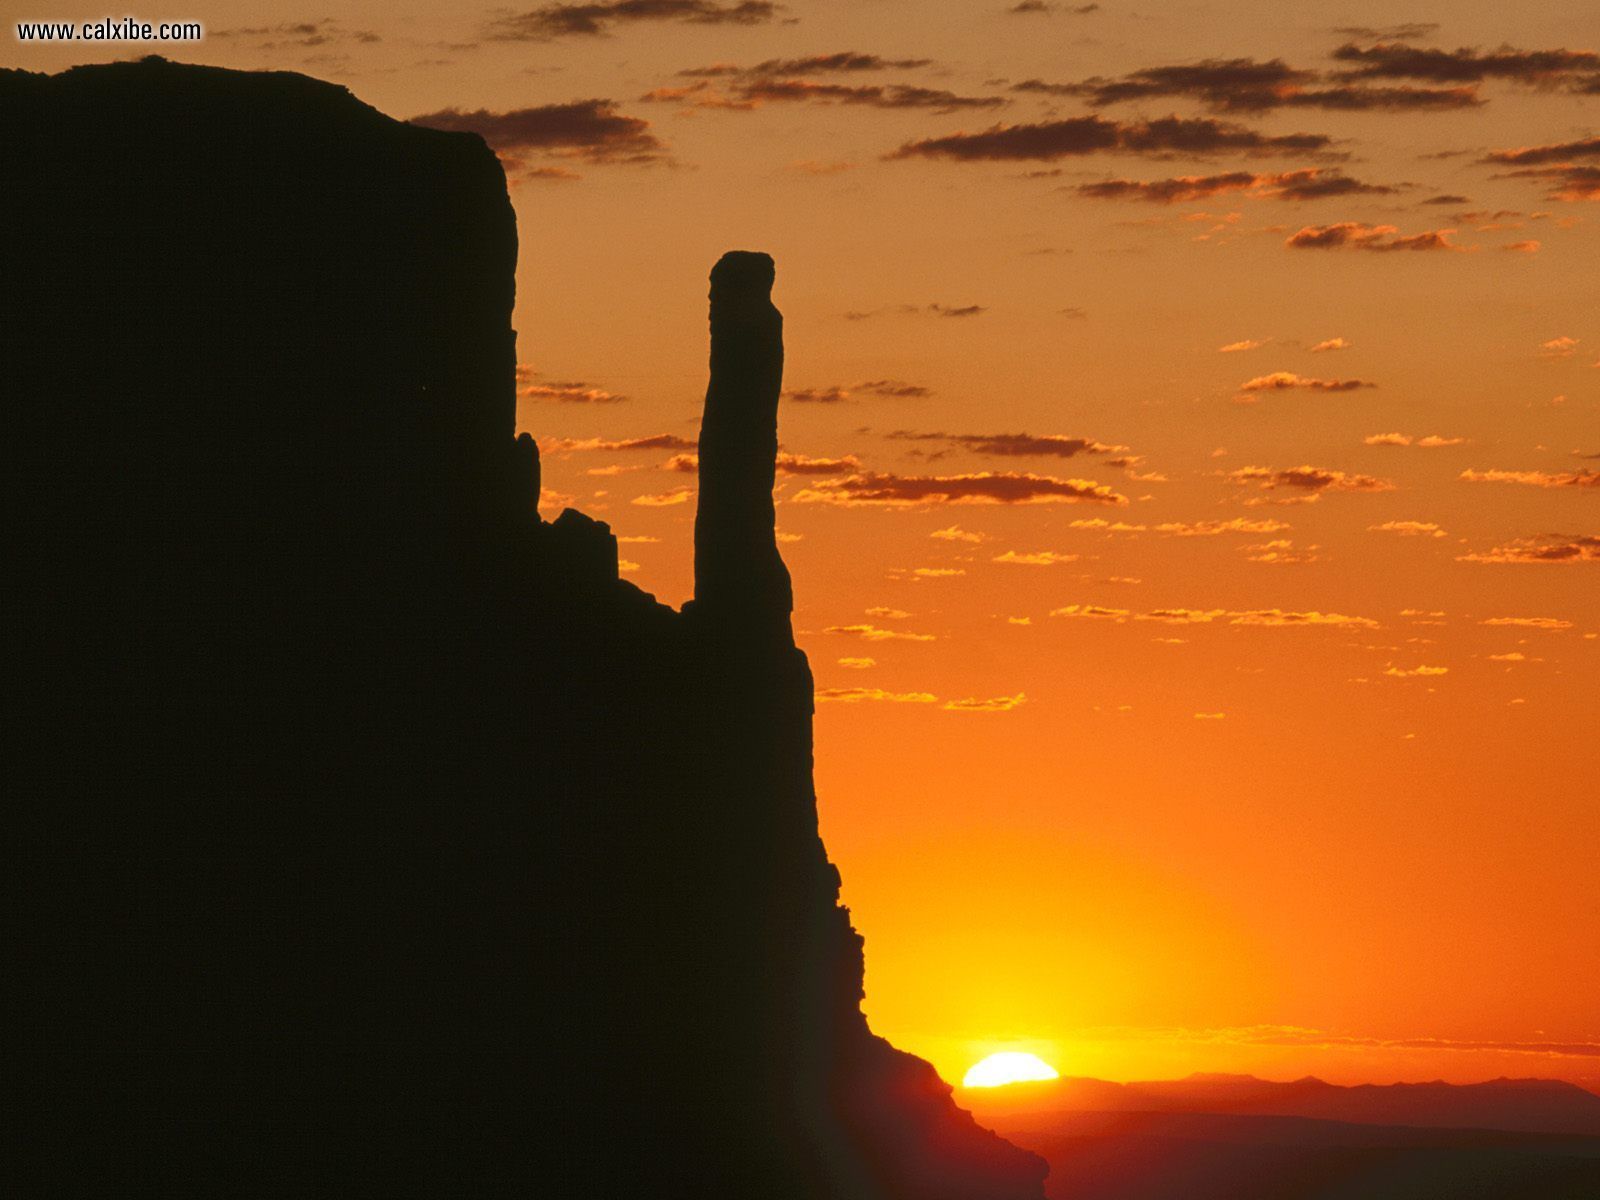 Nature: Edge Of Evening Monument Valley Navajo Tribal Park Arizona